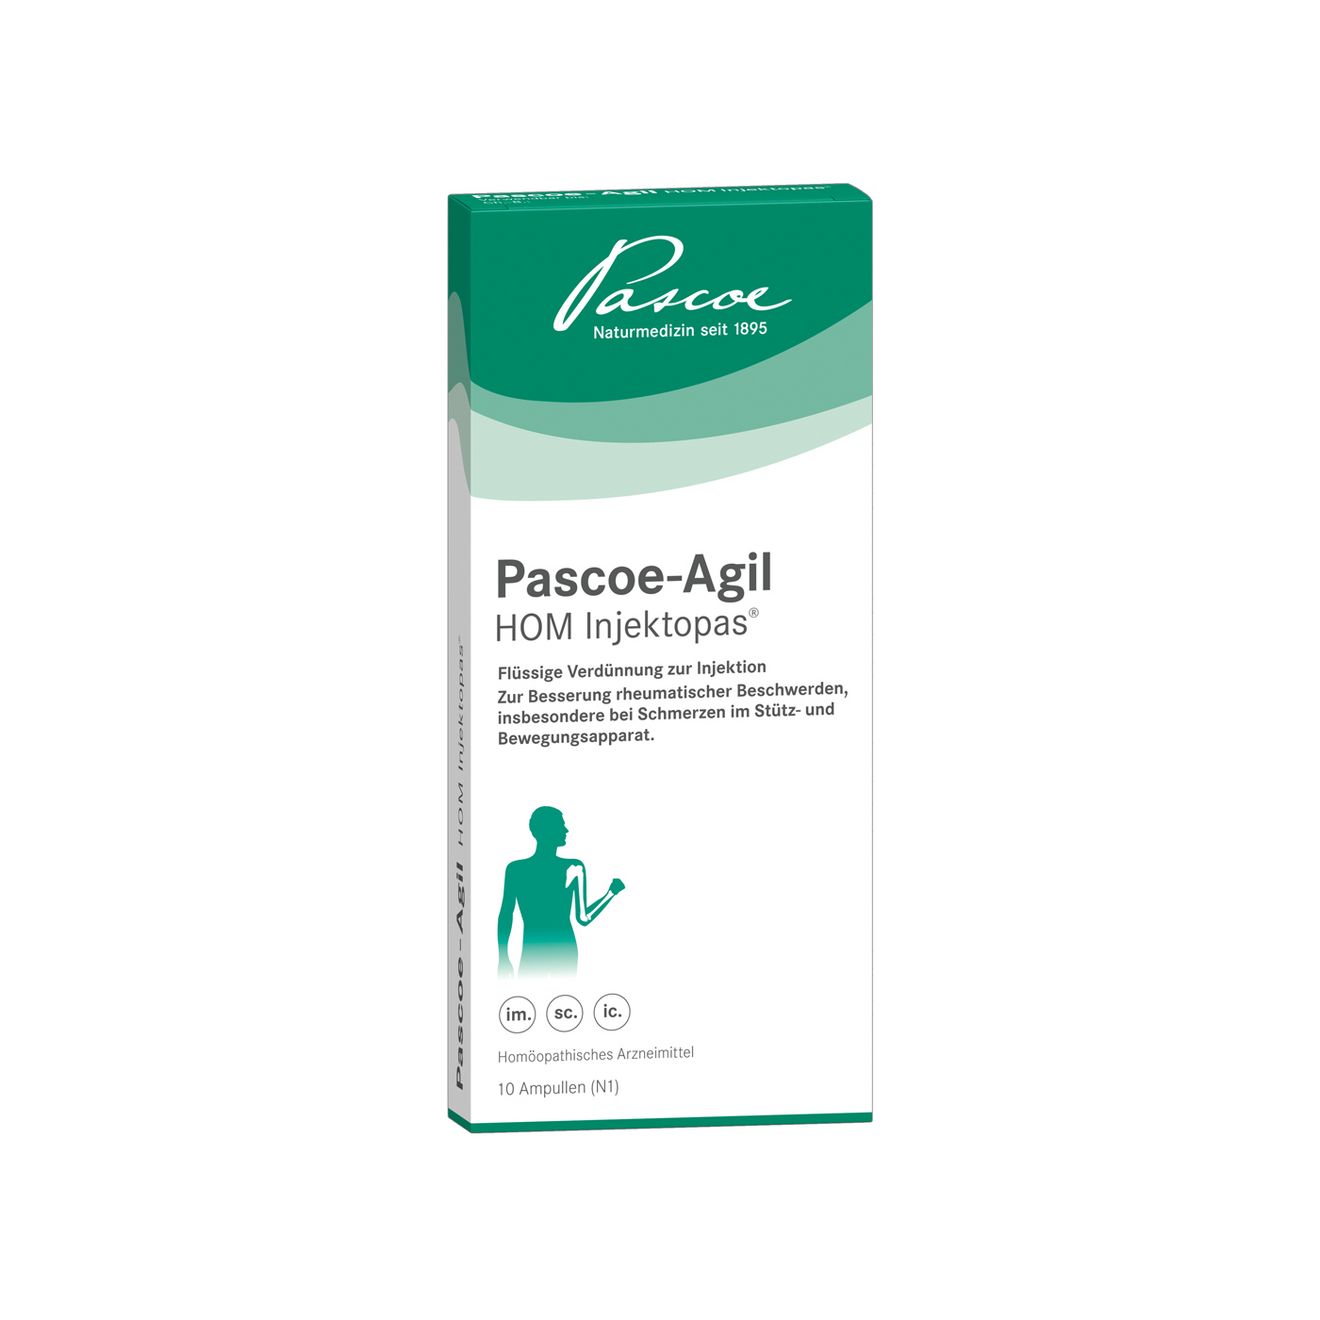 Pascoe-Agil HOM Injektopas 10 x 2 ml Packshot PZN 05952596